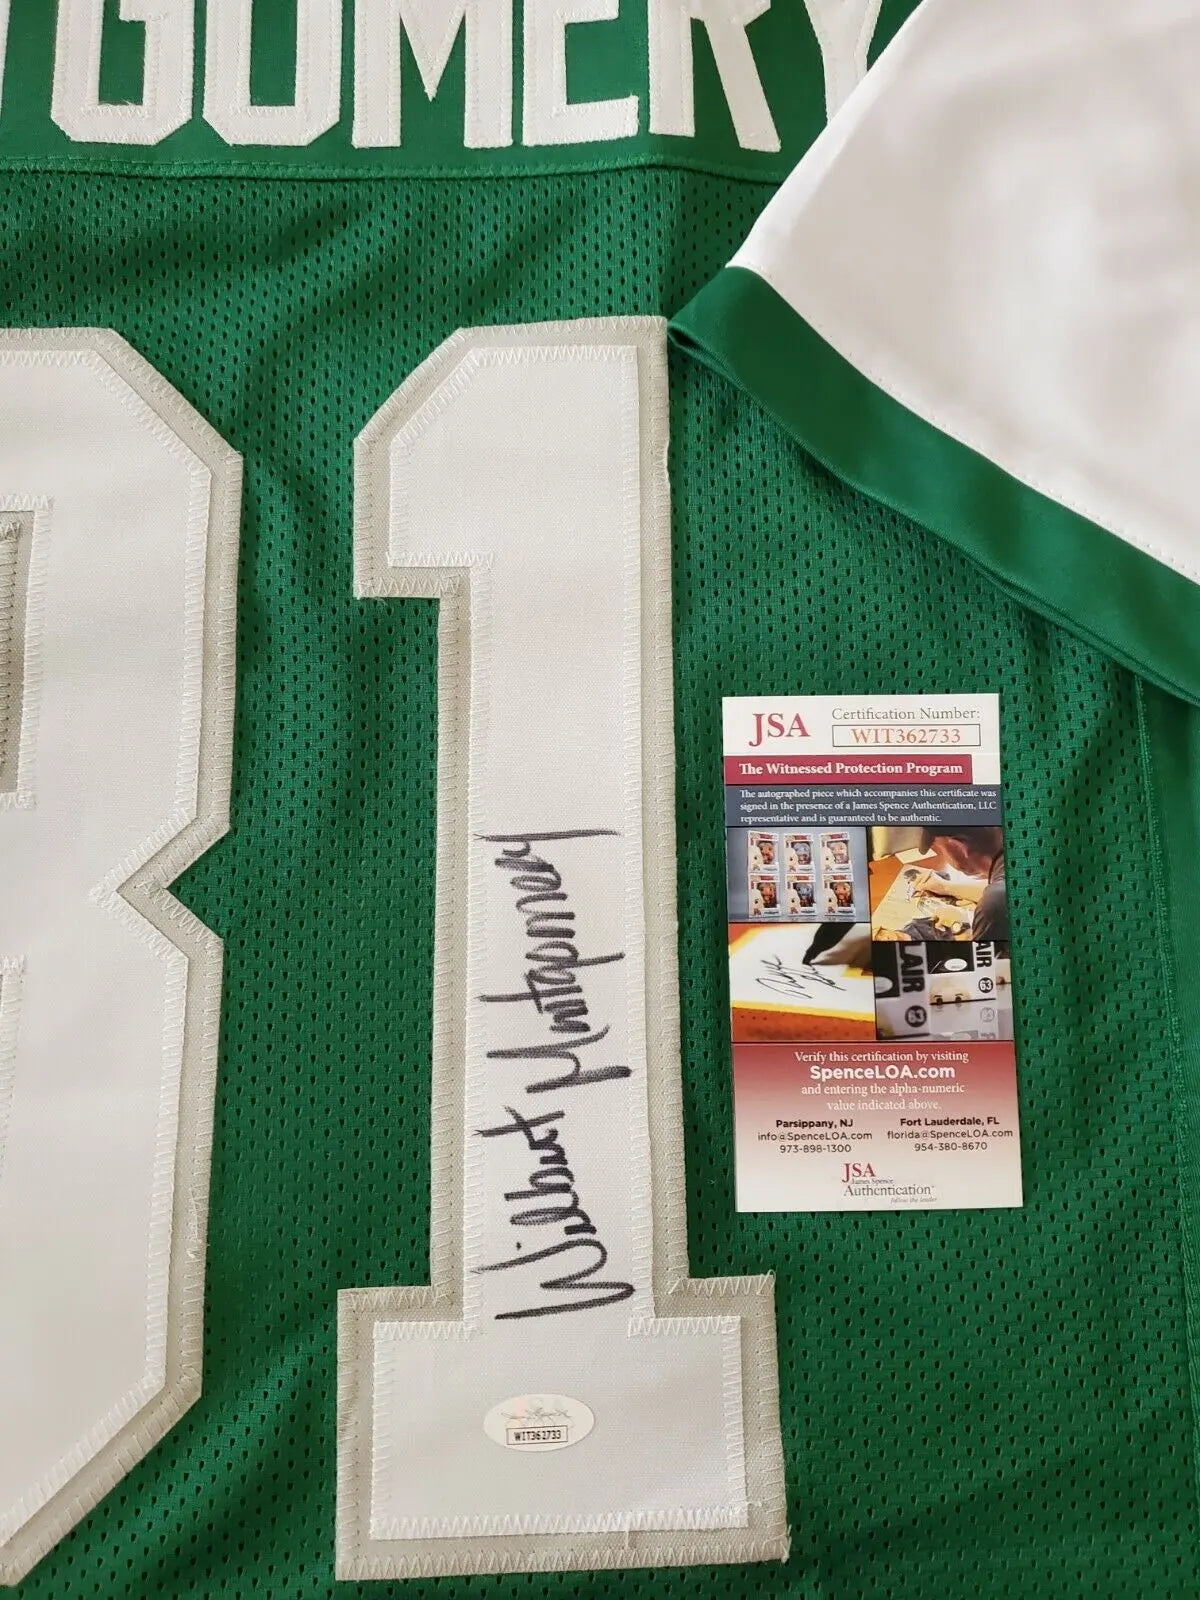 MVP Authentics Philadelphia Eagles Wilbert Montgomery Autographed Signed Jersey Jsa  Coa 98.10 sports jersey framing , jersey framing